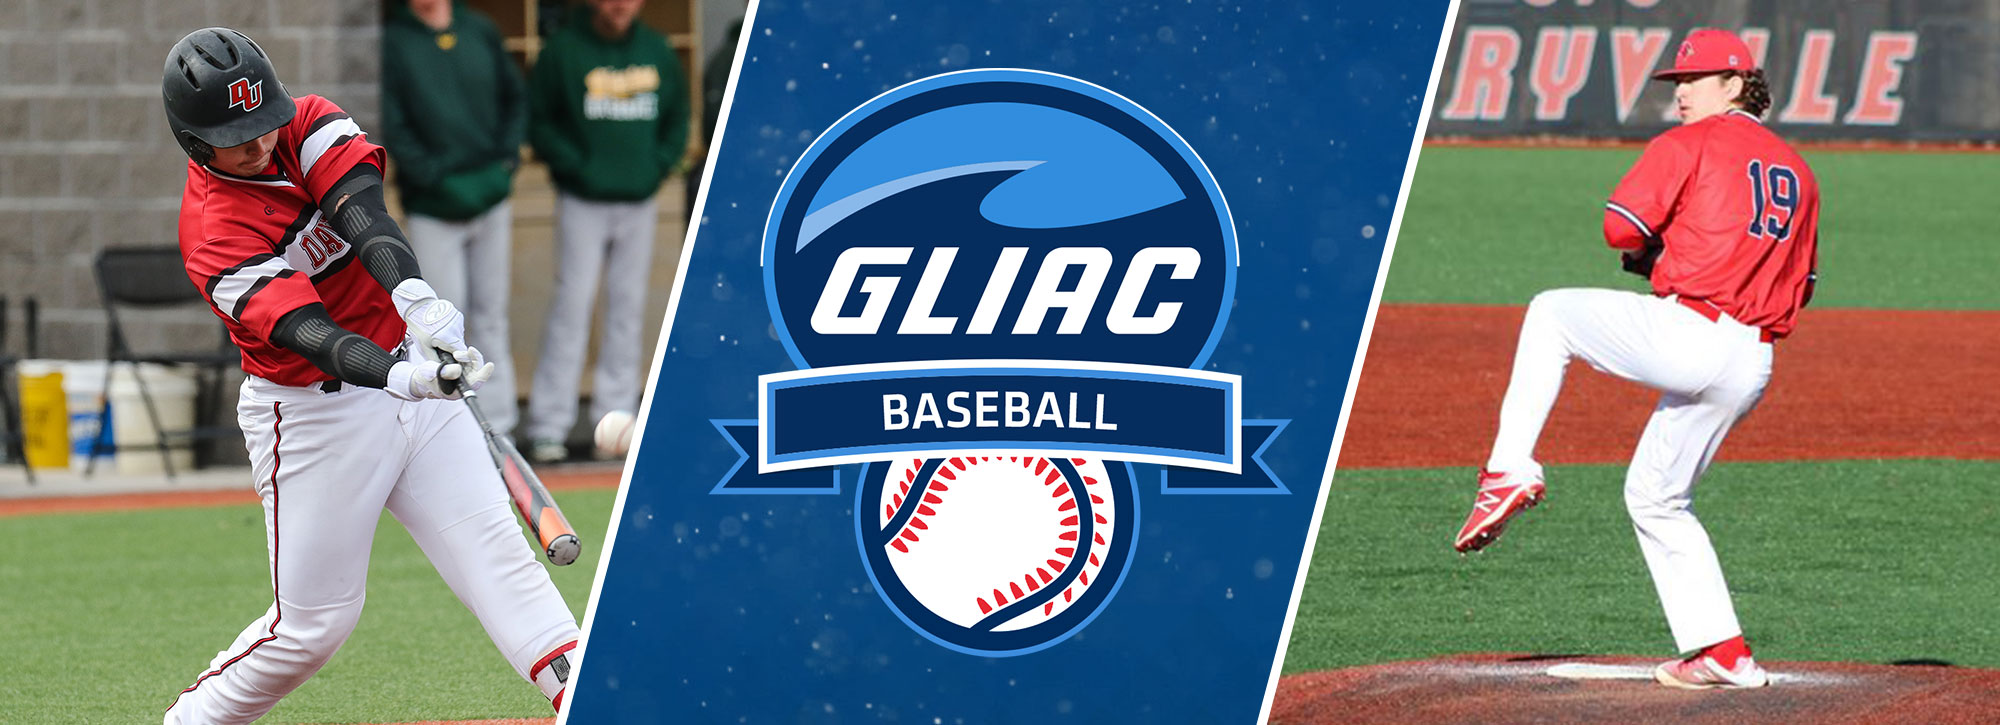 Davenport's Sobieski, Saginaw Valley's Schwellenbach Named GLIAC Baseball Players of the Week